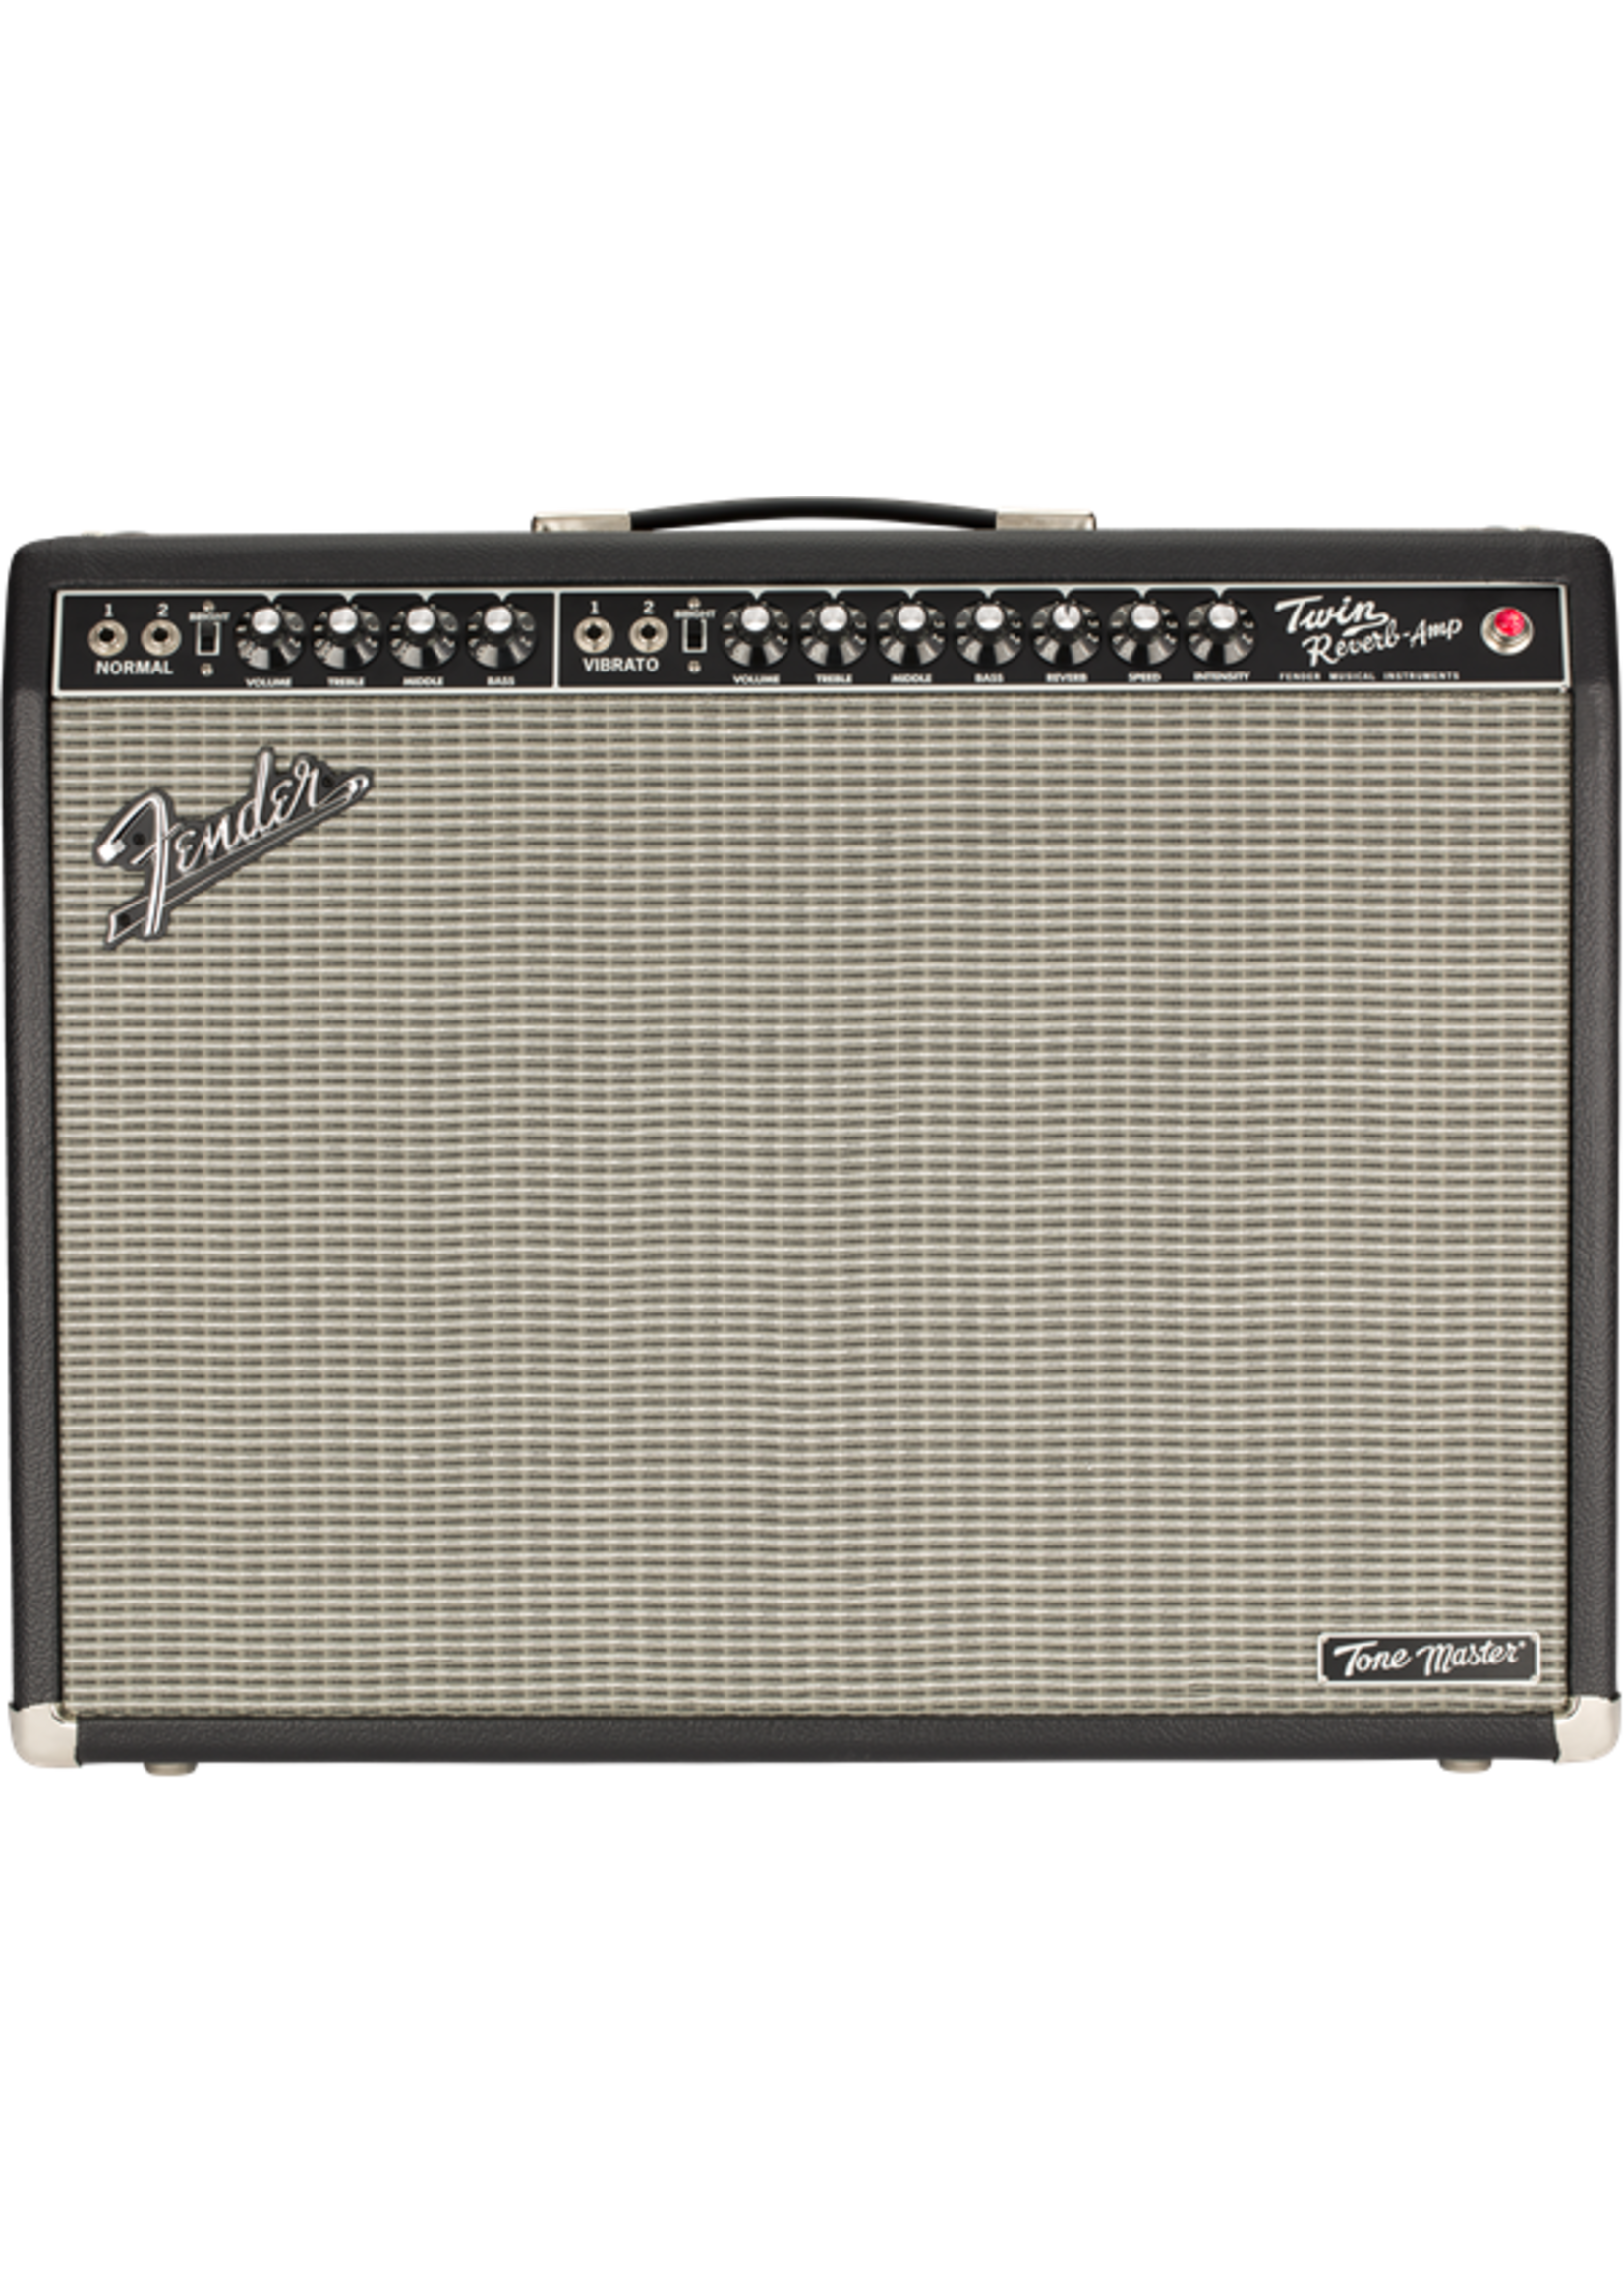 Fender Fender Amplifier Tone Master Twin Reverb